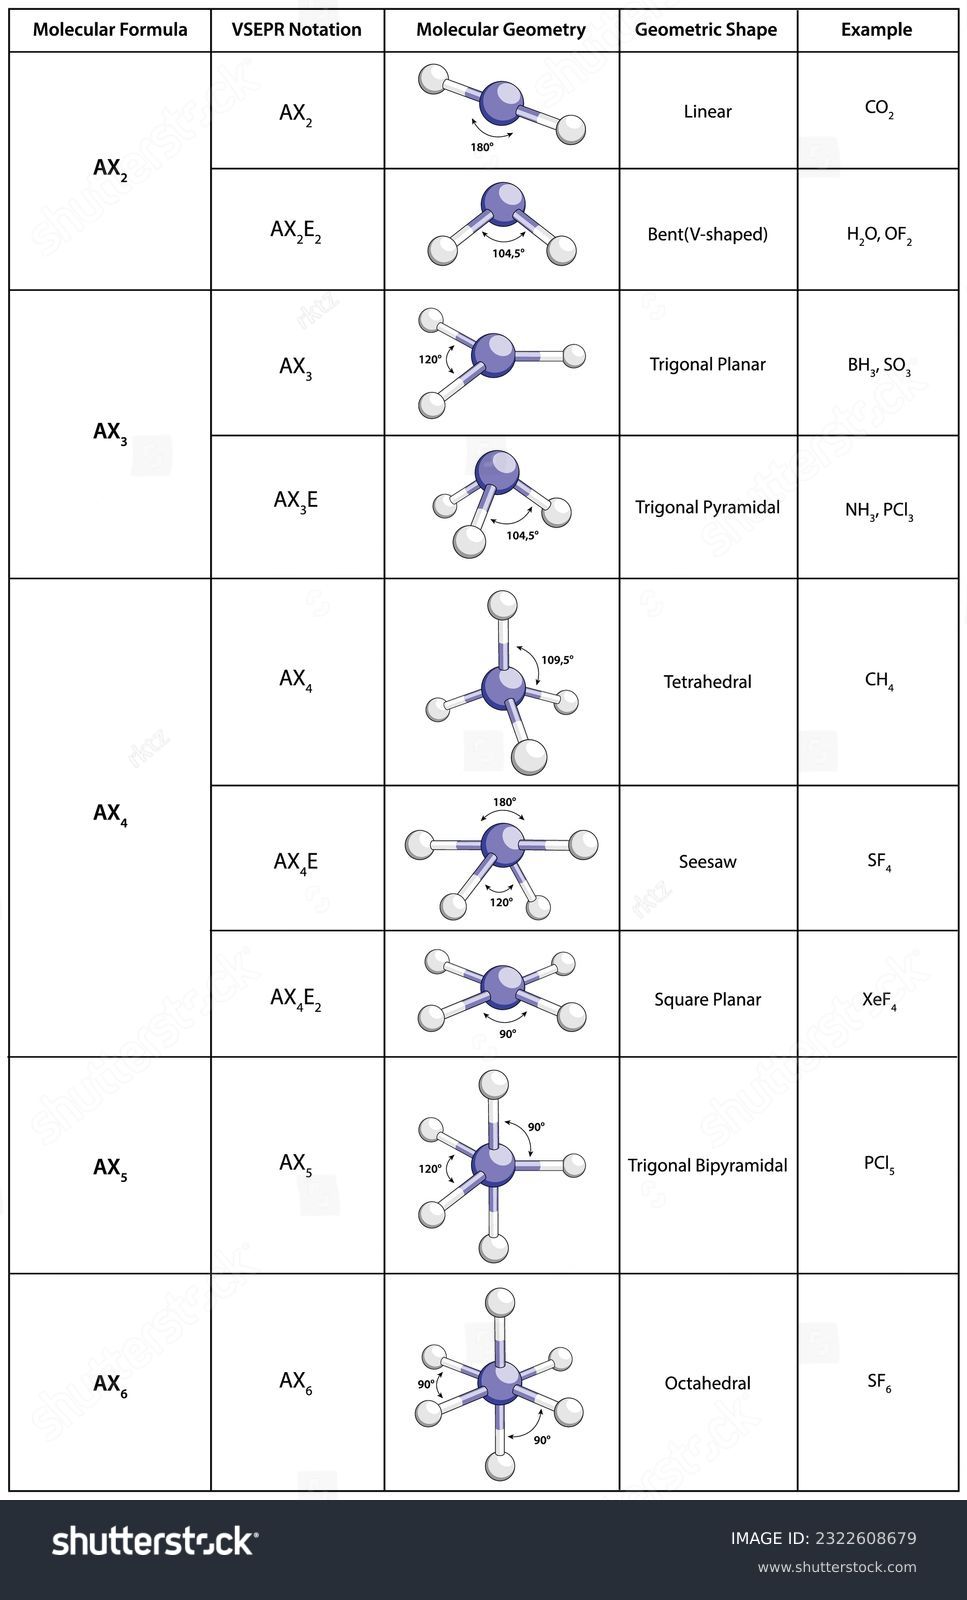 types of molecules according to molecular - Royalty Free Stock Vector ...